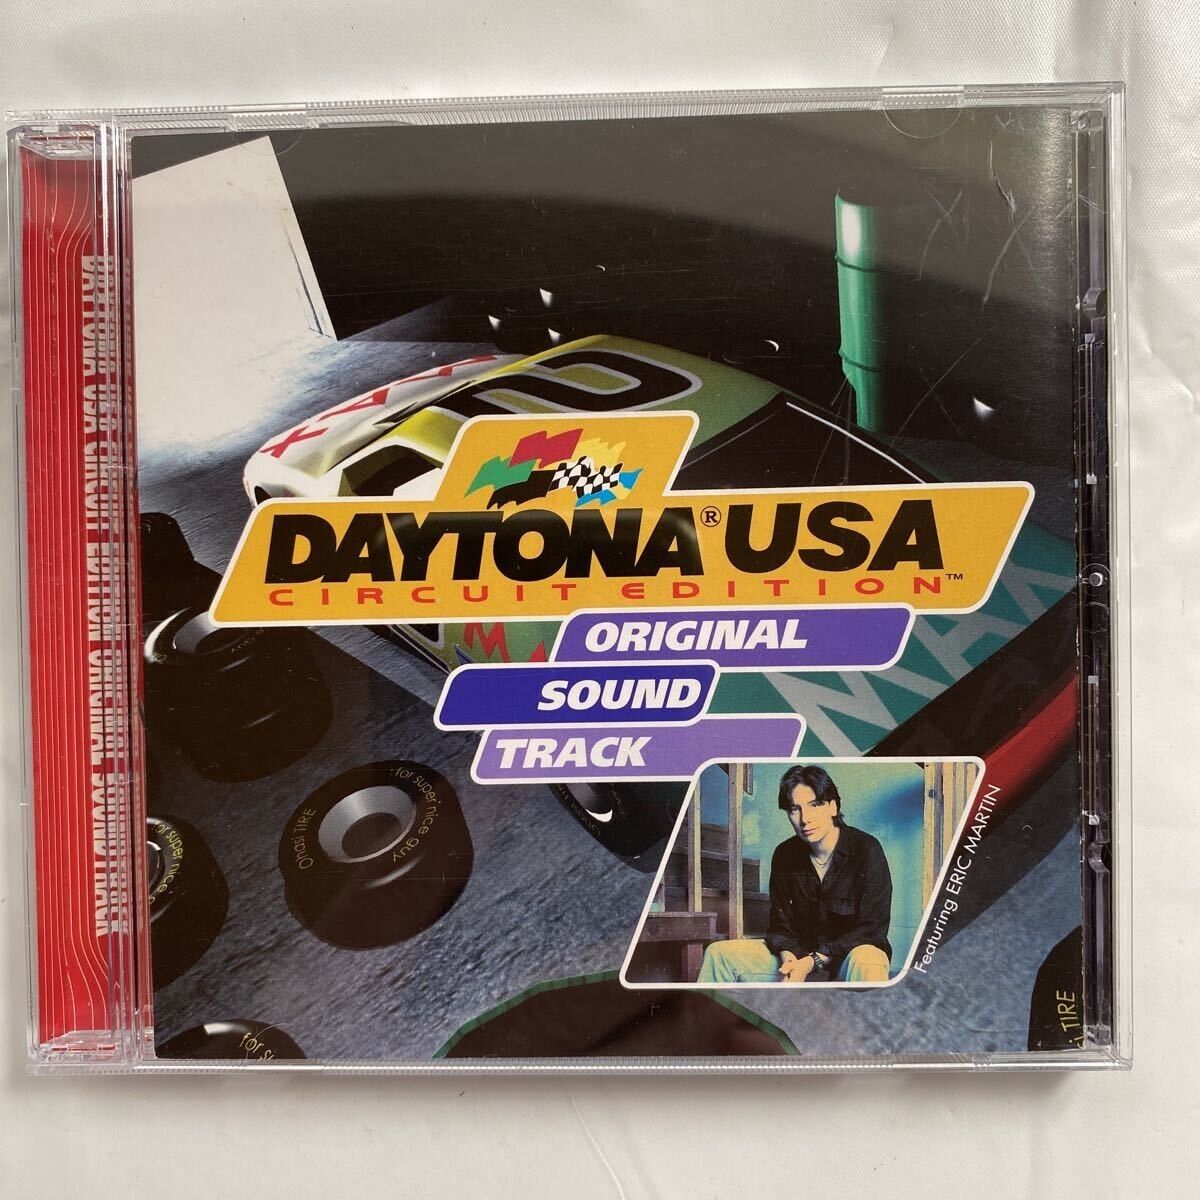 Daytona USA Circuit Edition Original Soundtrack 1CD OBI 1997 OST